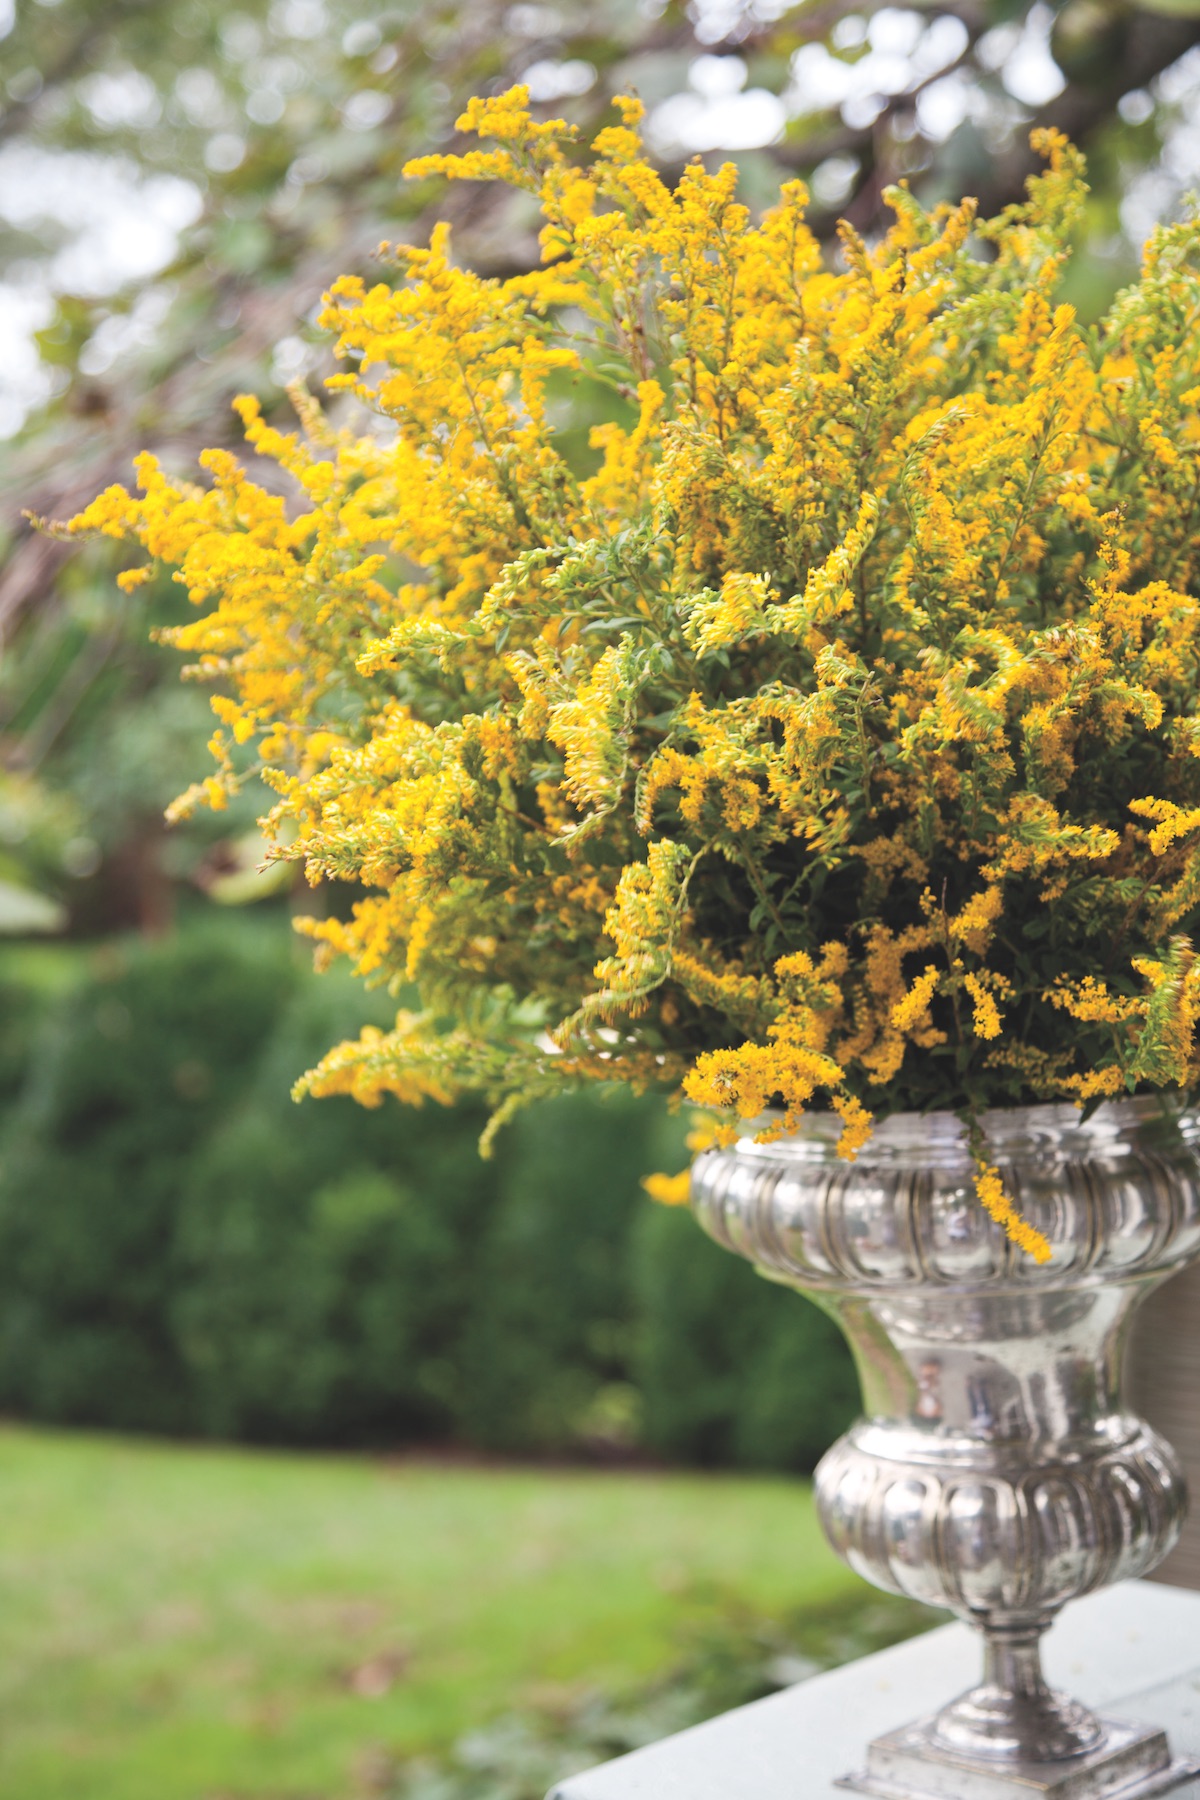 Arrangement of goldenrod flowers in a silver urn in Charlotte Moss's garden